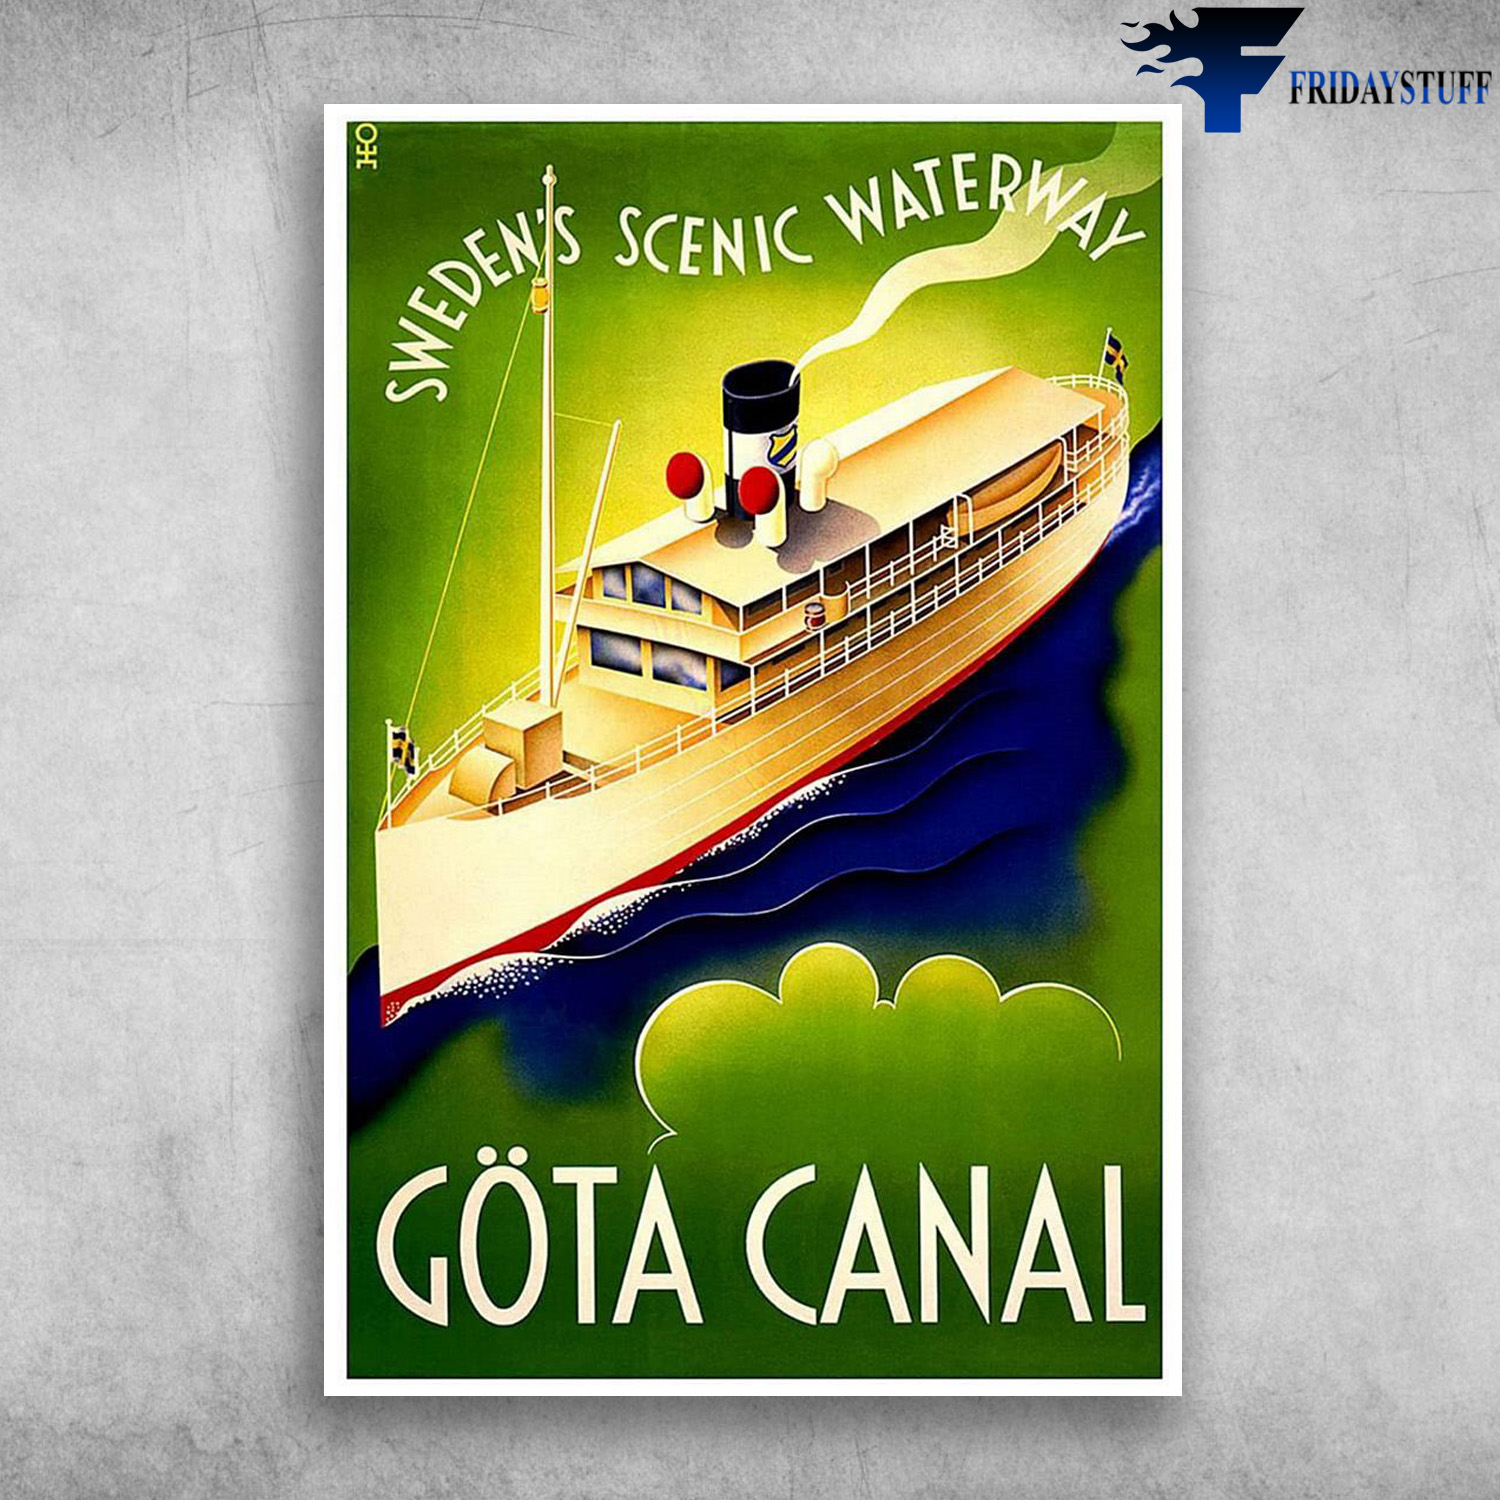 The Big Ship - Sweden's Scenic Waterway, Göta Canal, Vintage Sweden